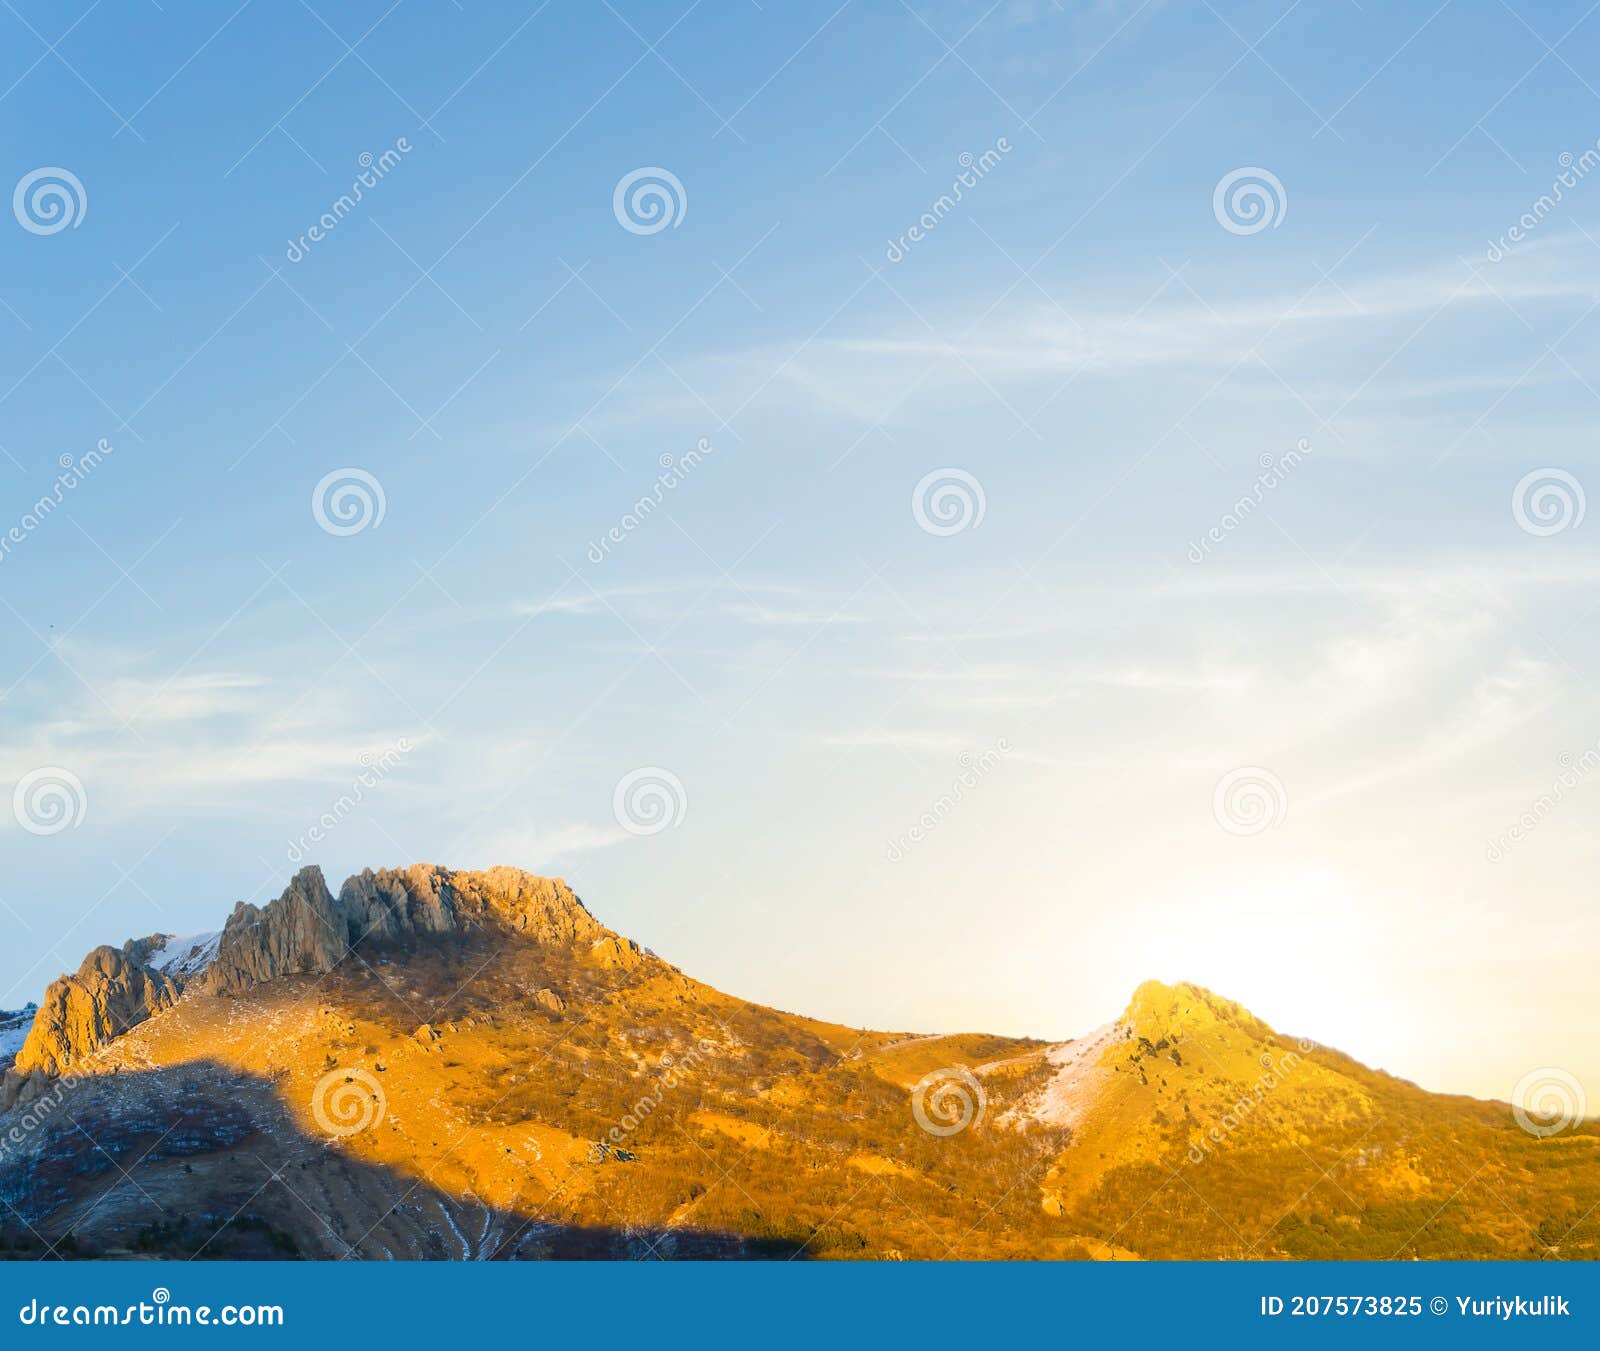 mountain ridge in the ligh of evening sun